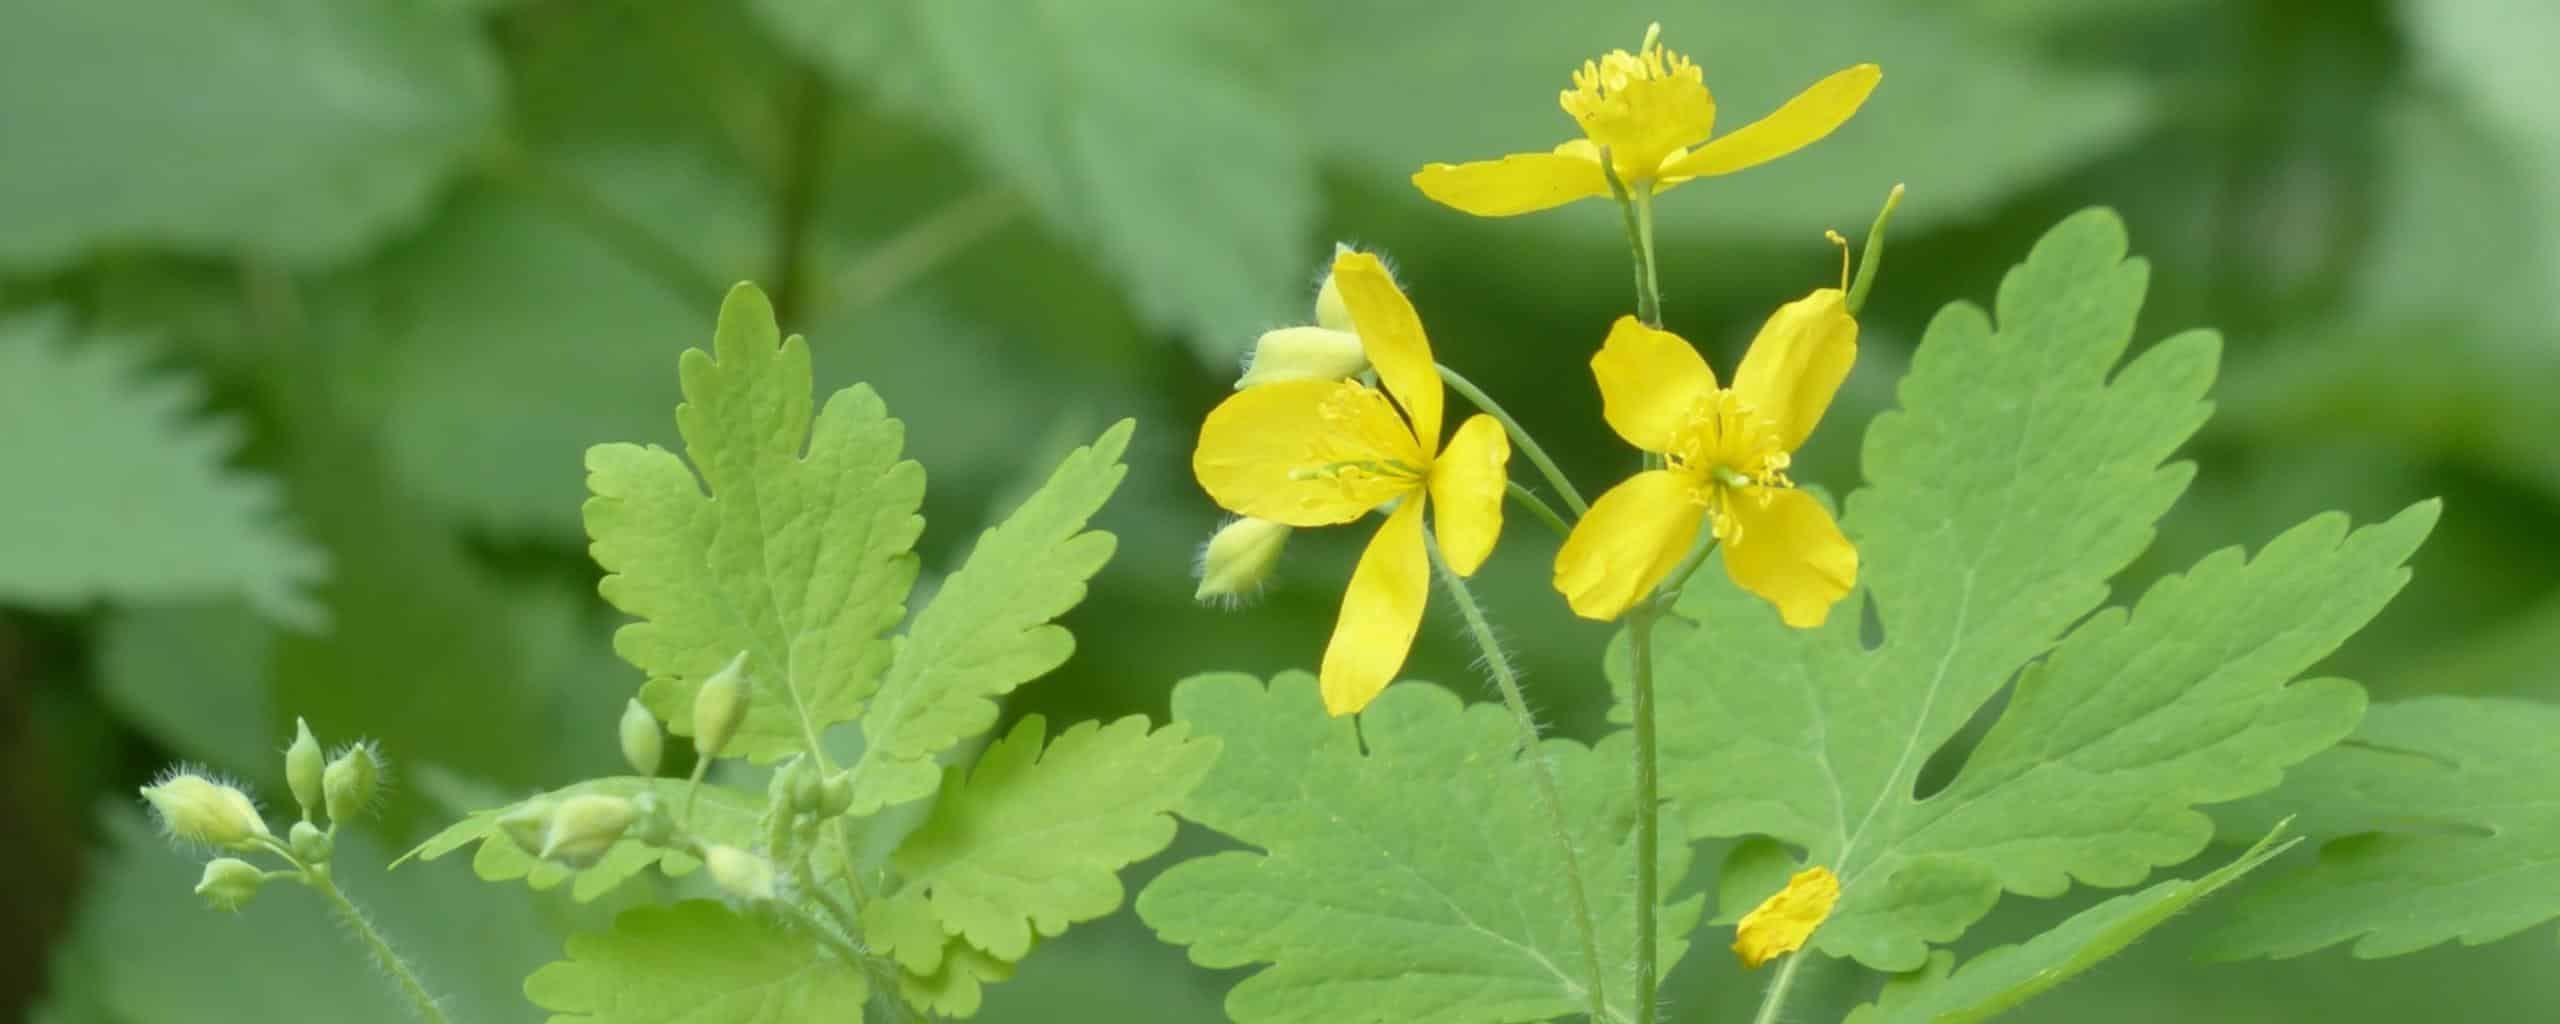 greater celandine, tetterwort - a usefull weed that resorbs warts